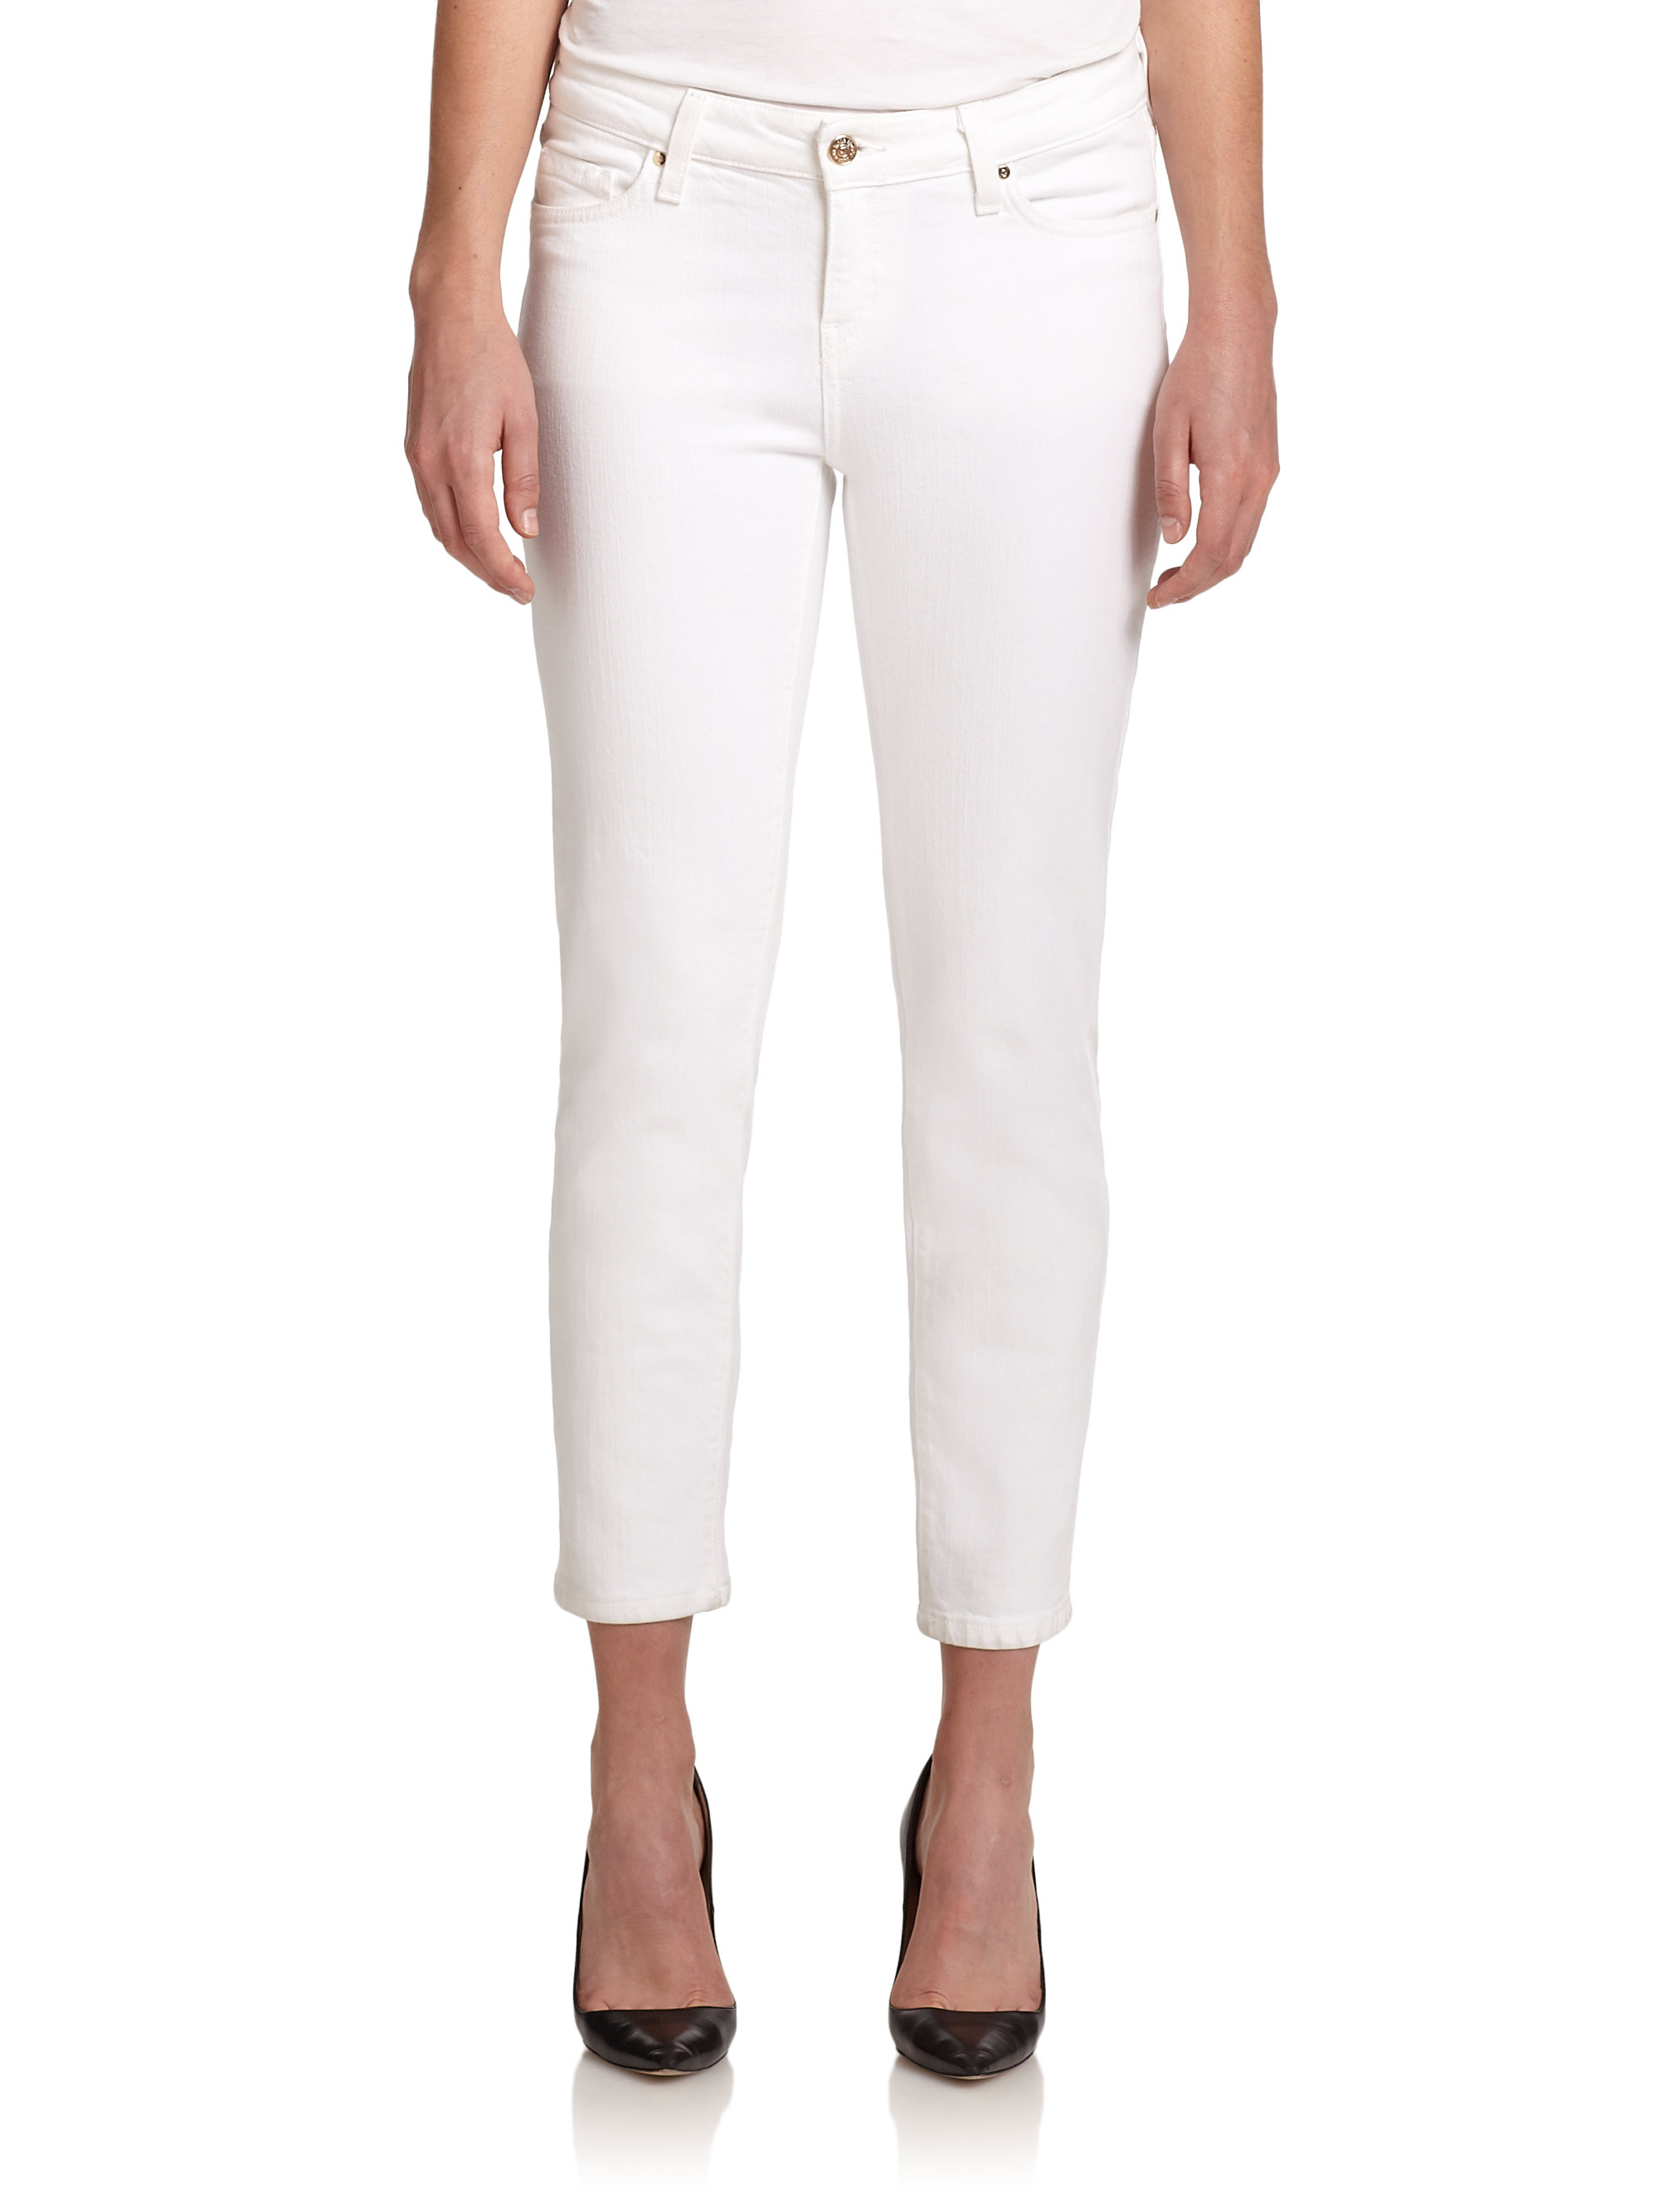 Lyst - Kate spade new york Broome Street Capri Jeans in White